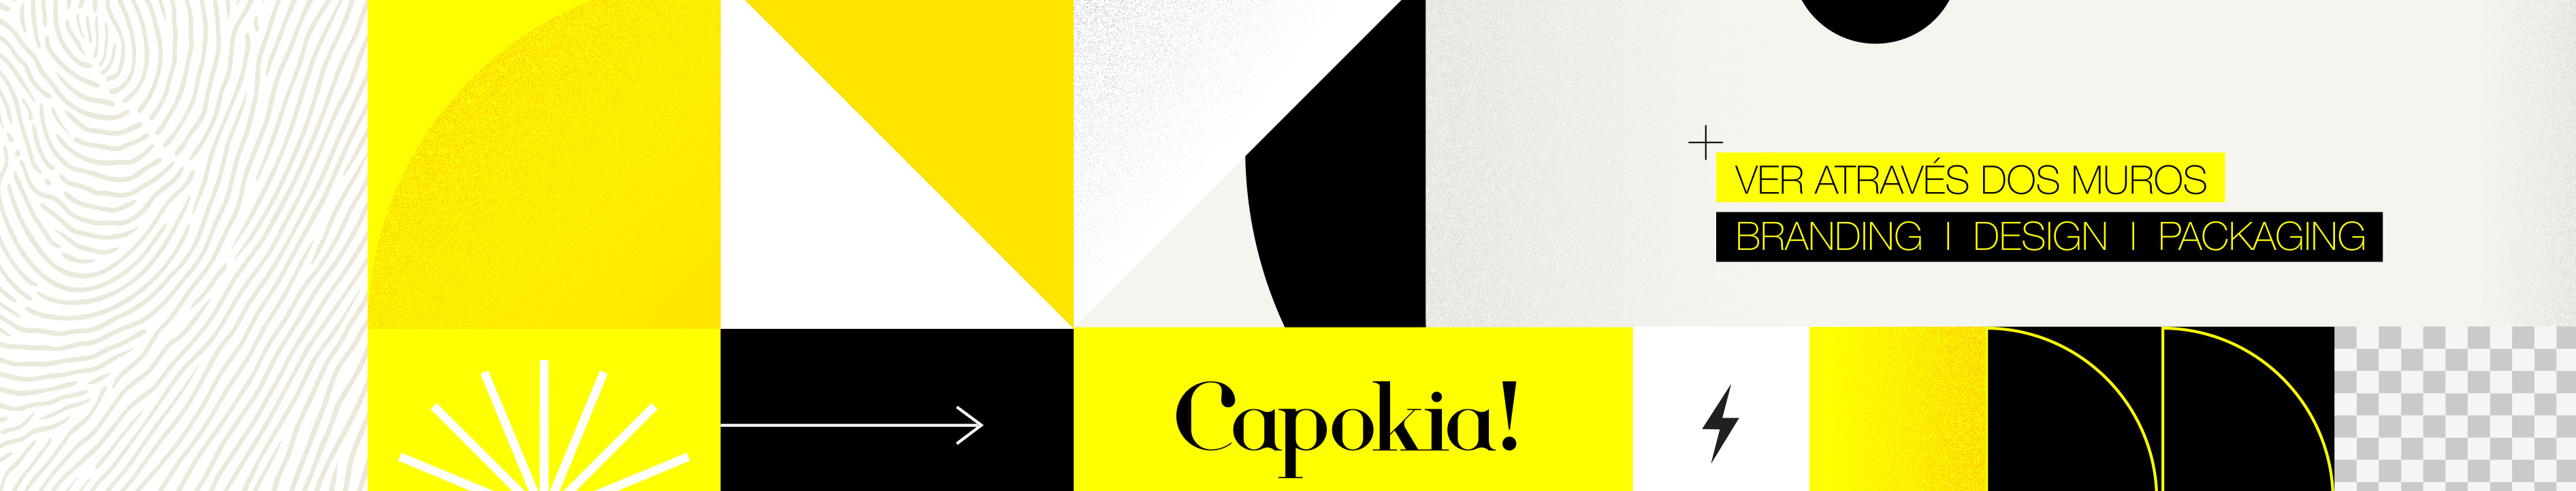 Capokia! Studio's profile banner